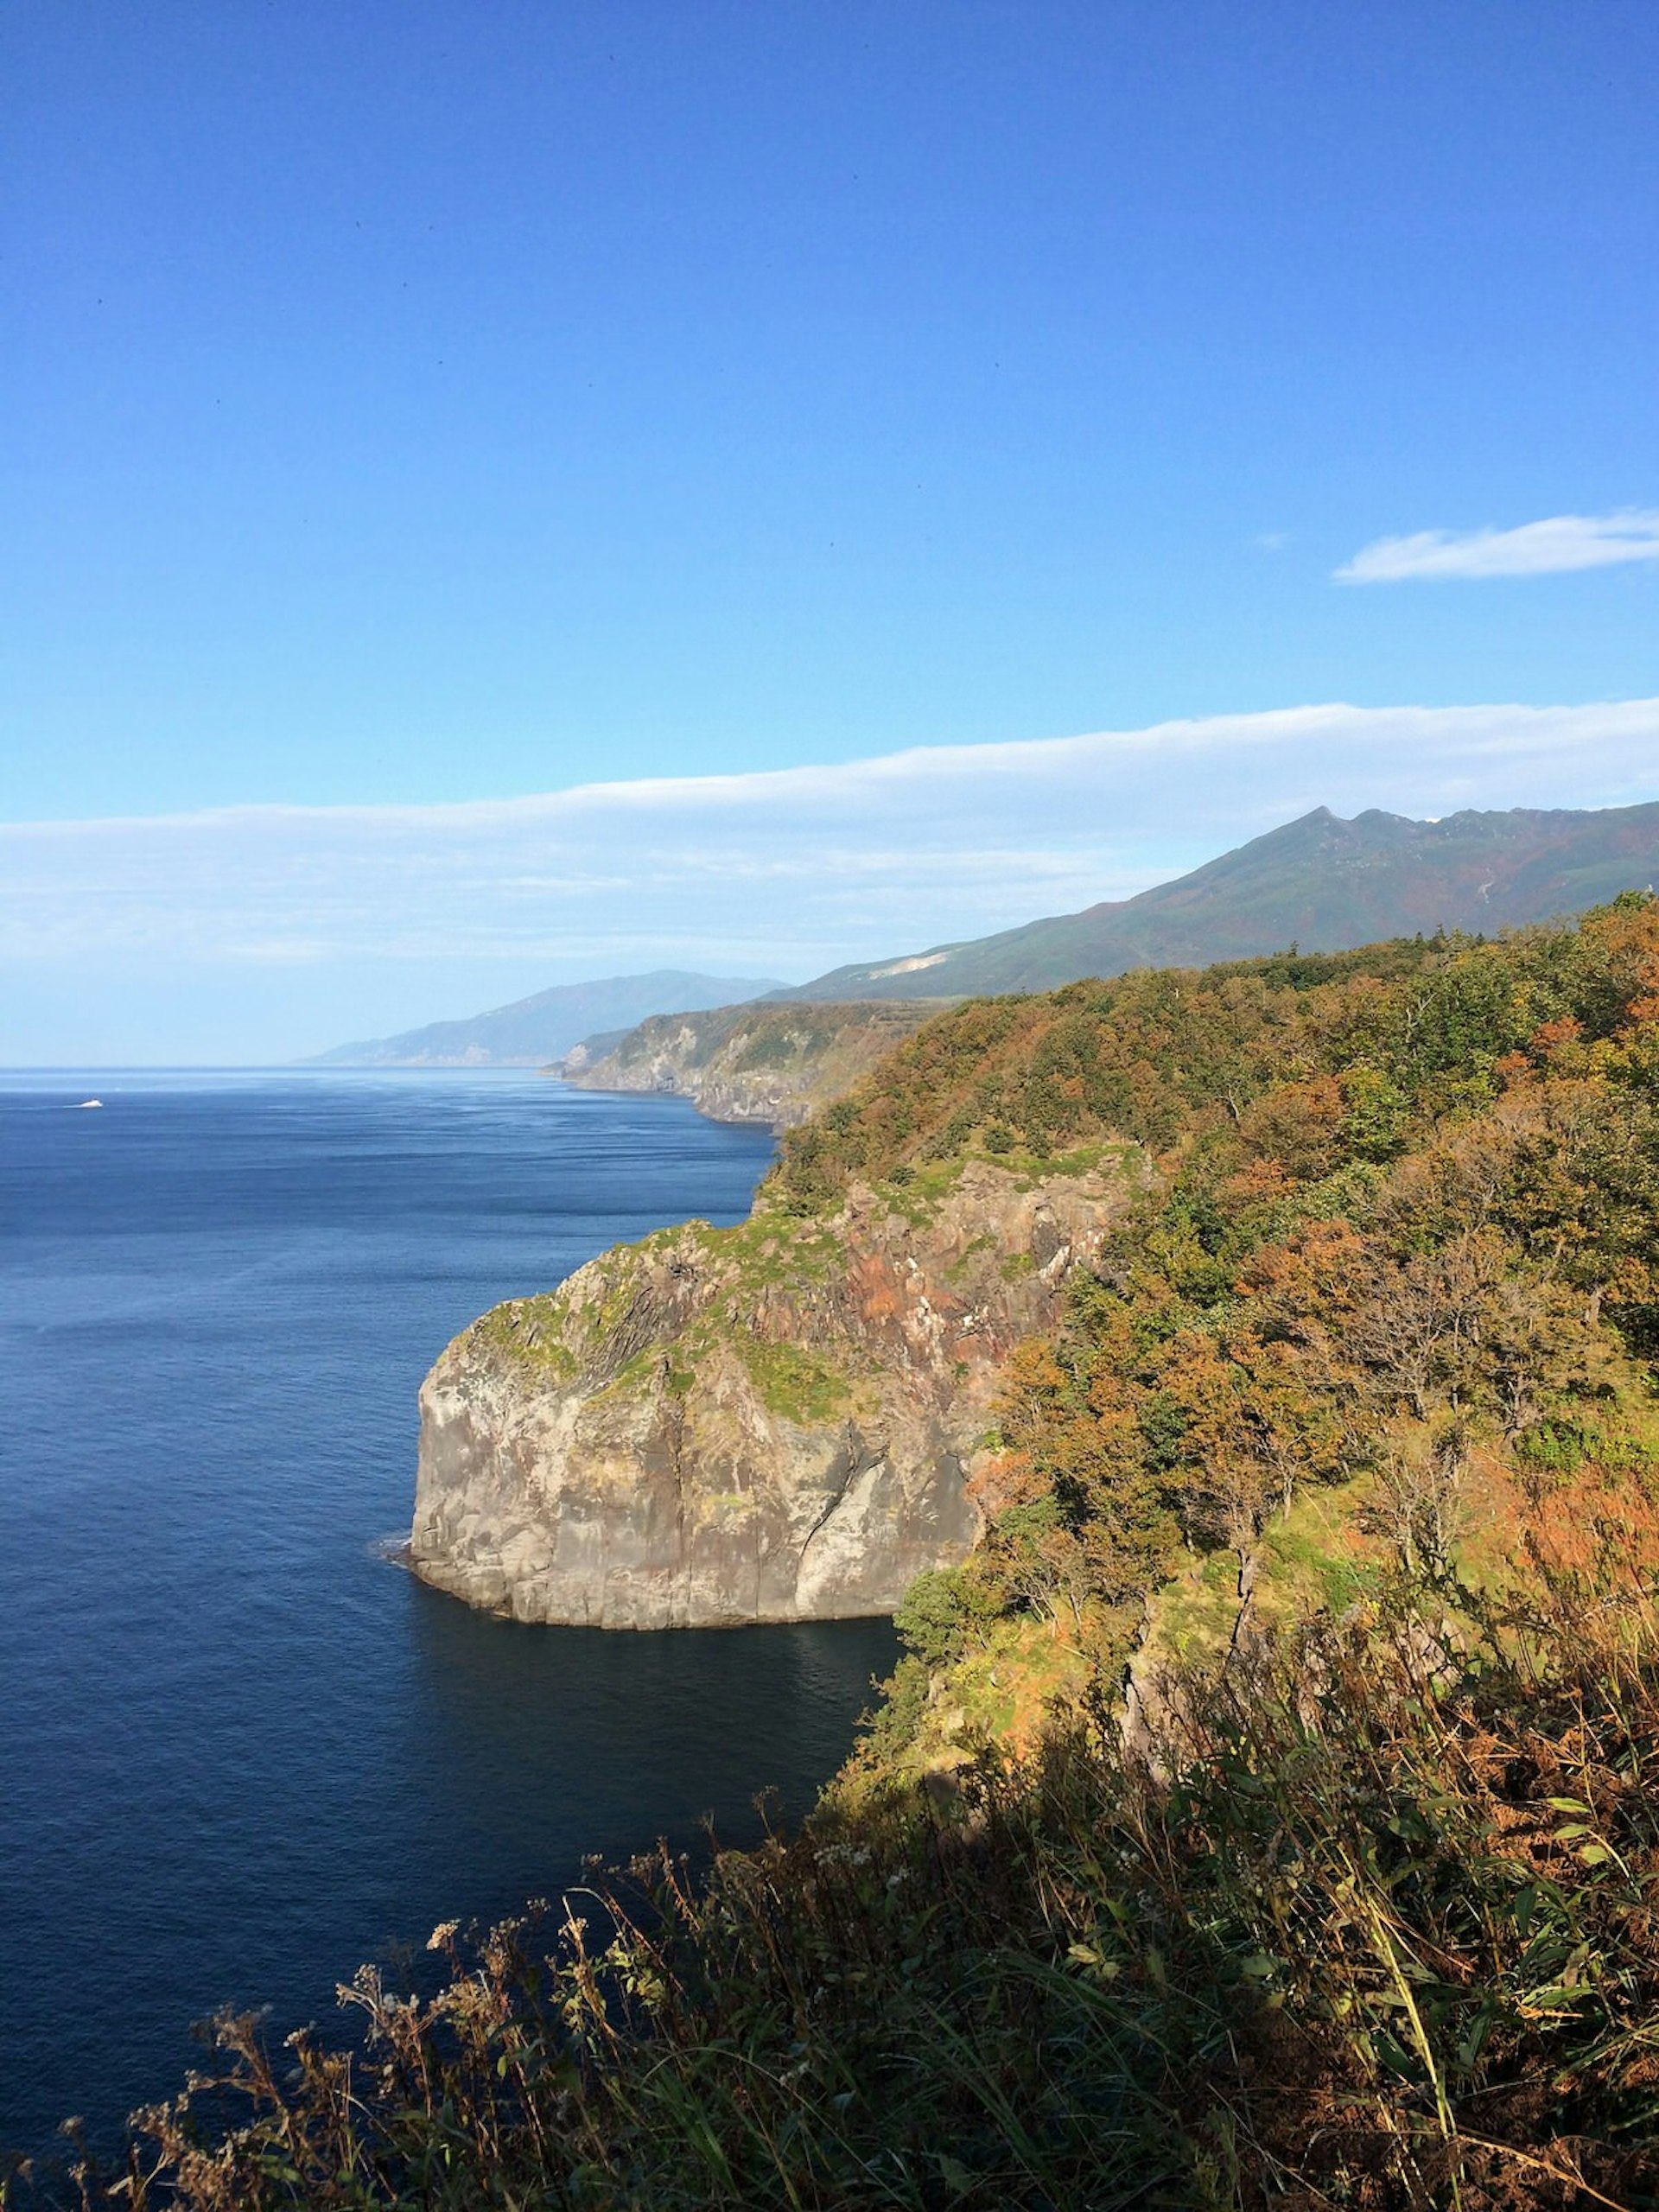 View of the rocky, tree-covered coastline of Shiretoko Peninsula